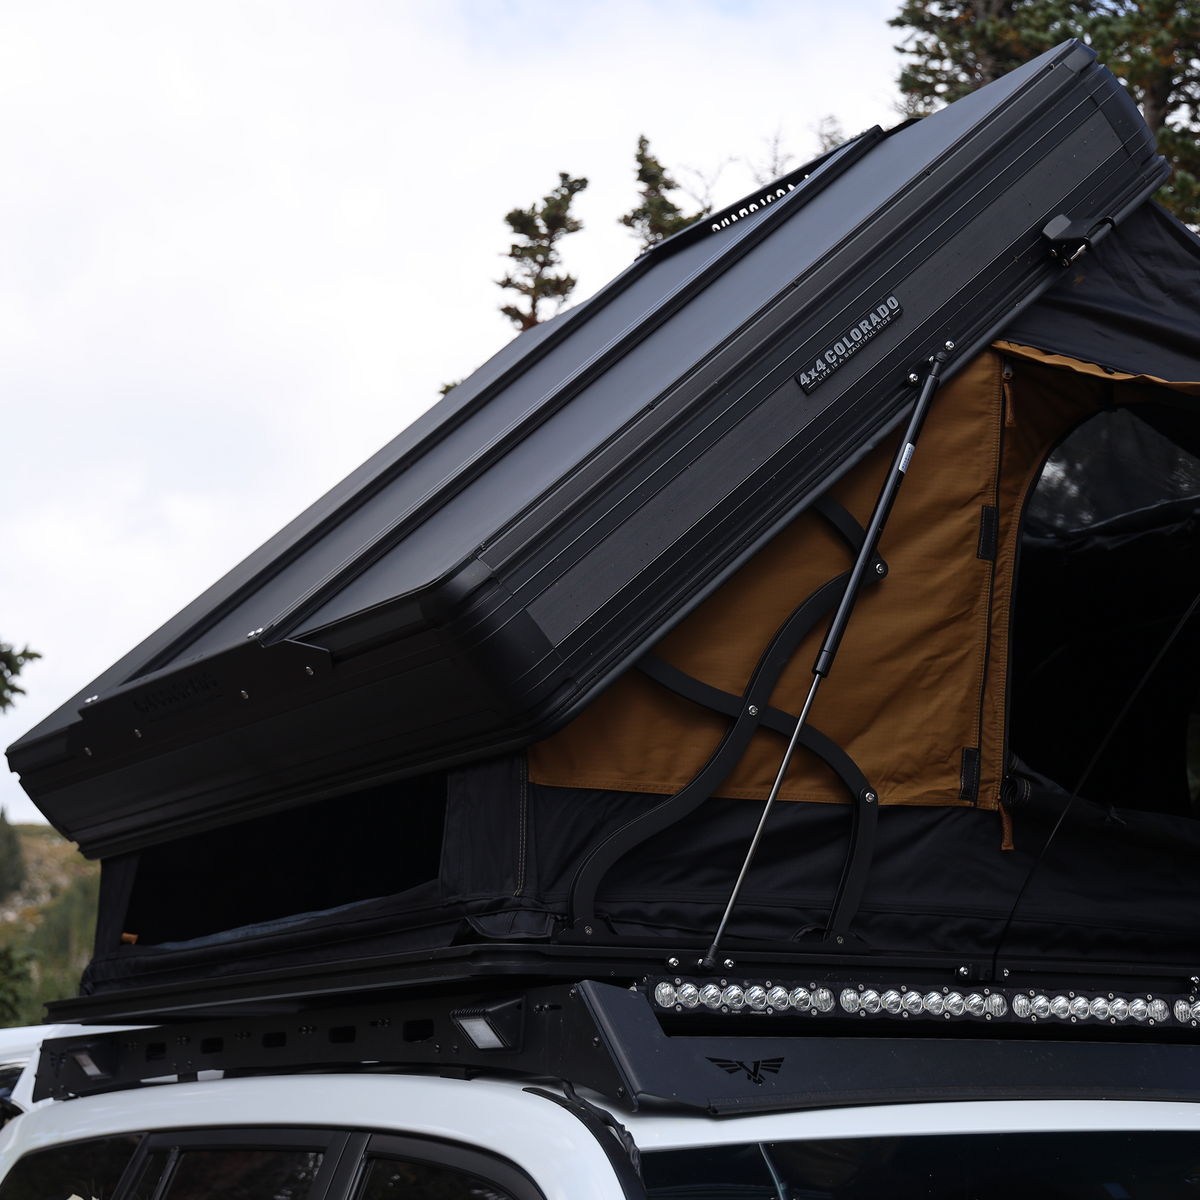 4x4 Colorado 2-Person Alto Mini Hardshell Roof Top Tent